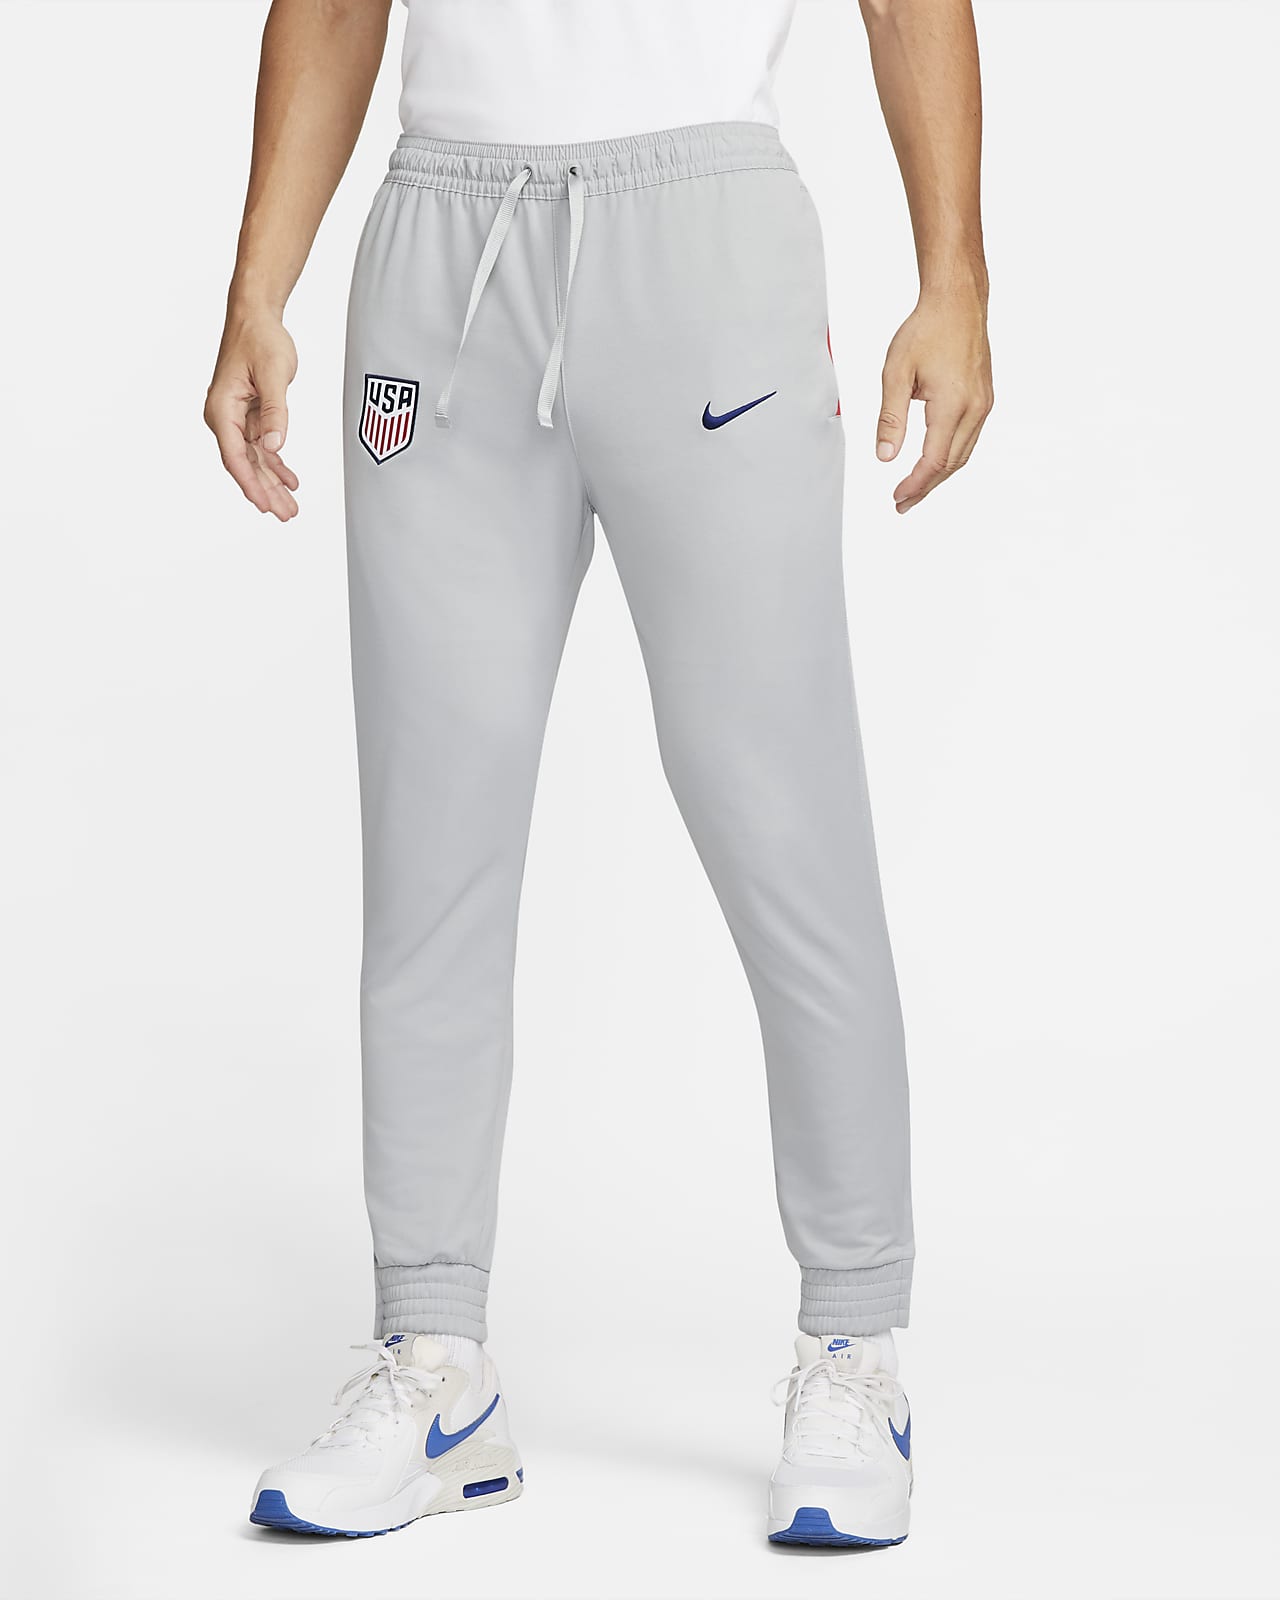 Mamut Iniciar sesión milagro Pantalones de fútbol de tejido Knit para hombre Estados Unidos. Nike.com